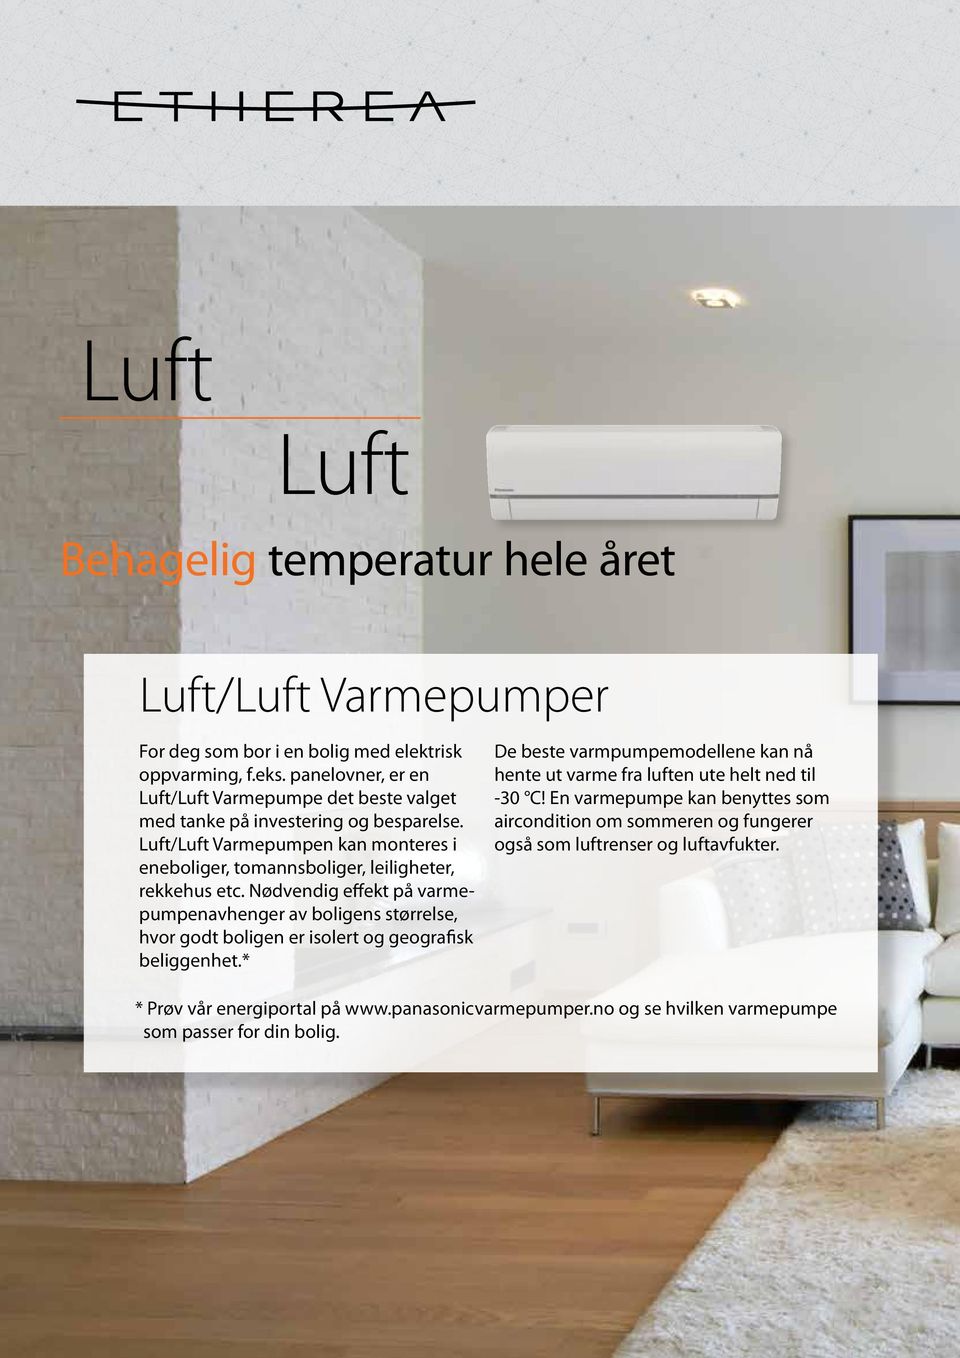 Luft/Luft Varmepumpen kan monteres i eneboliger, tomannsboliger, leiligheter, rekkehus etc.